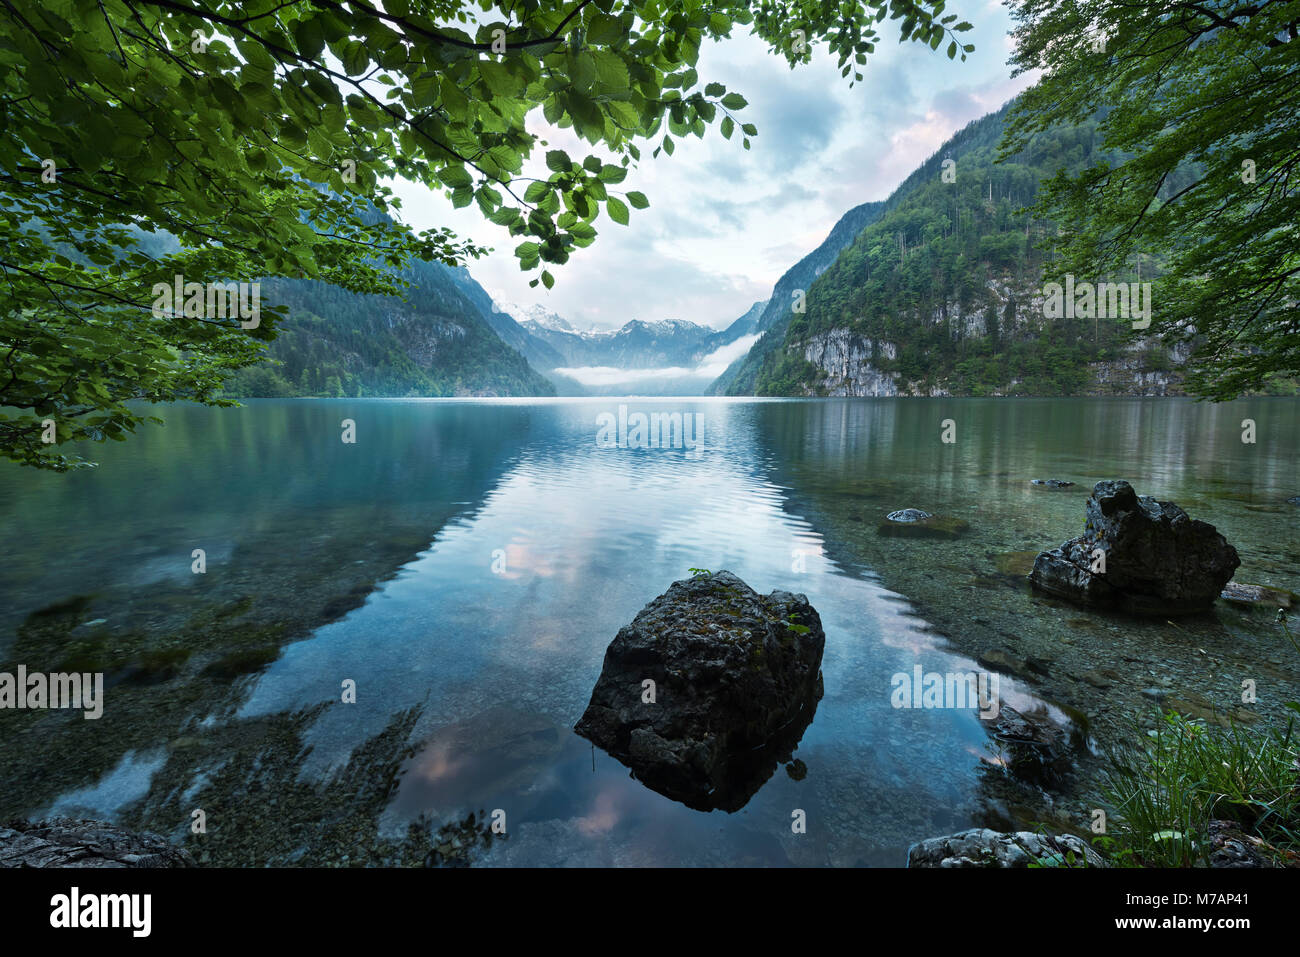 Lake Koenigssee in Berchtesgadener Land (district), Bavaria, Germany Stock Photo